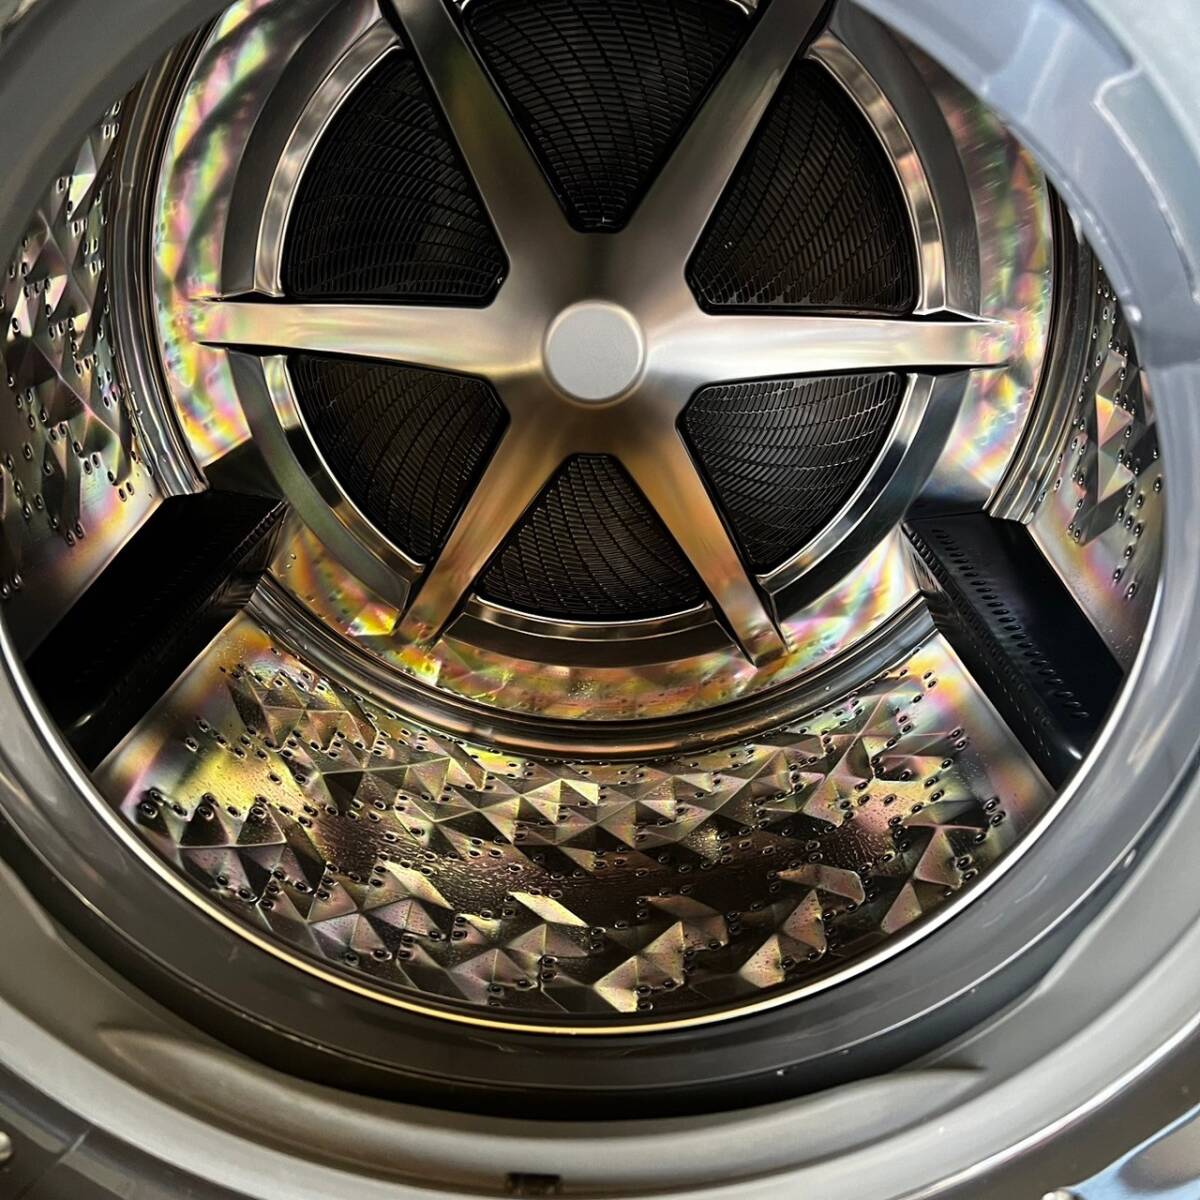 【Panasonic】 パナソニック ドラム式洗濯乾燥機 洗濯10kg 乾燥6kg NA-VX7700L 2017年製の画像6